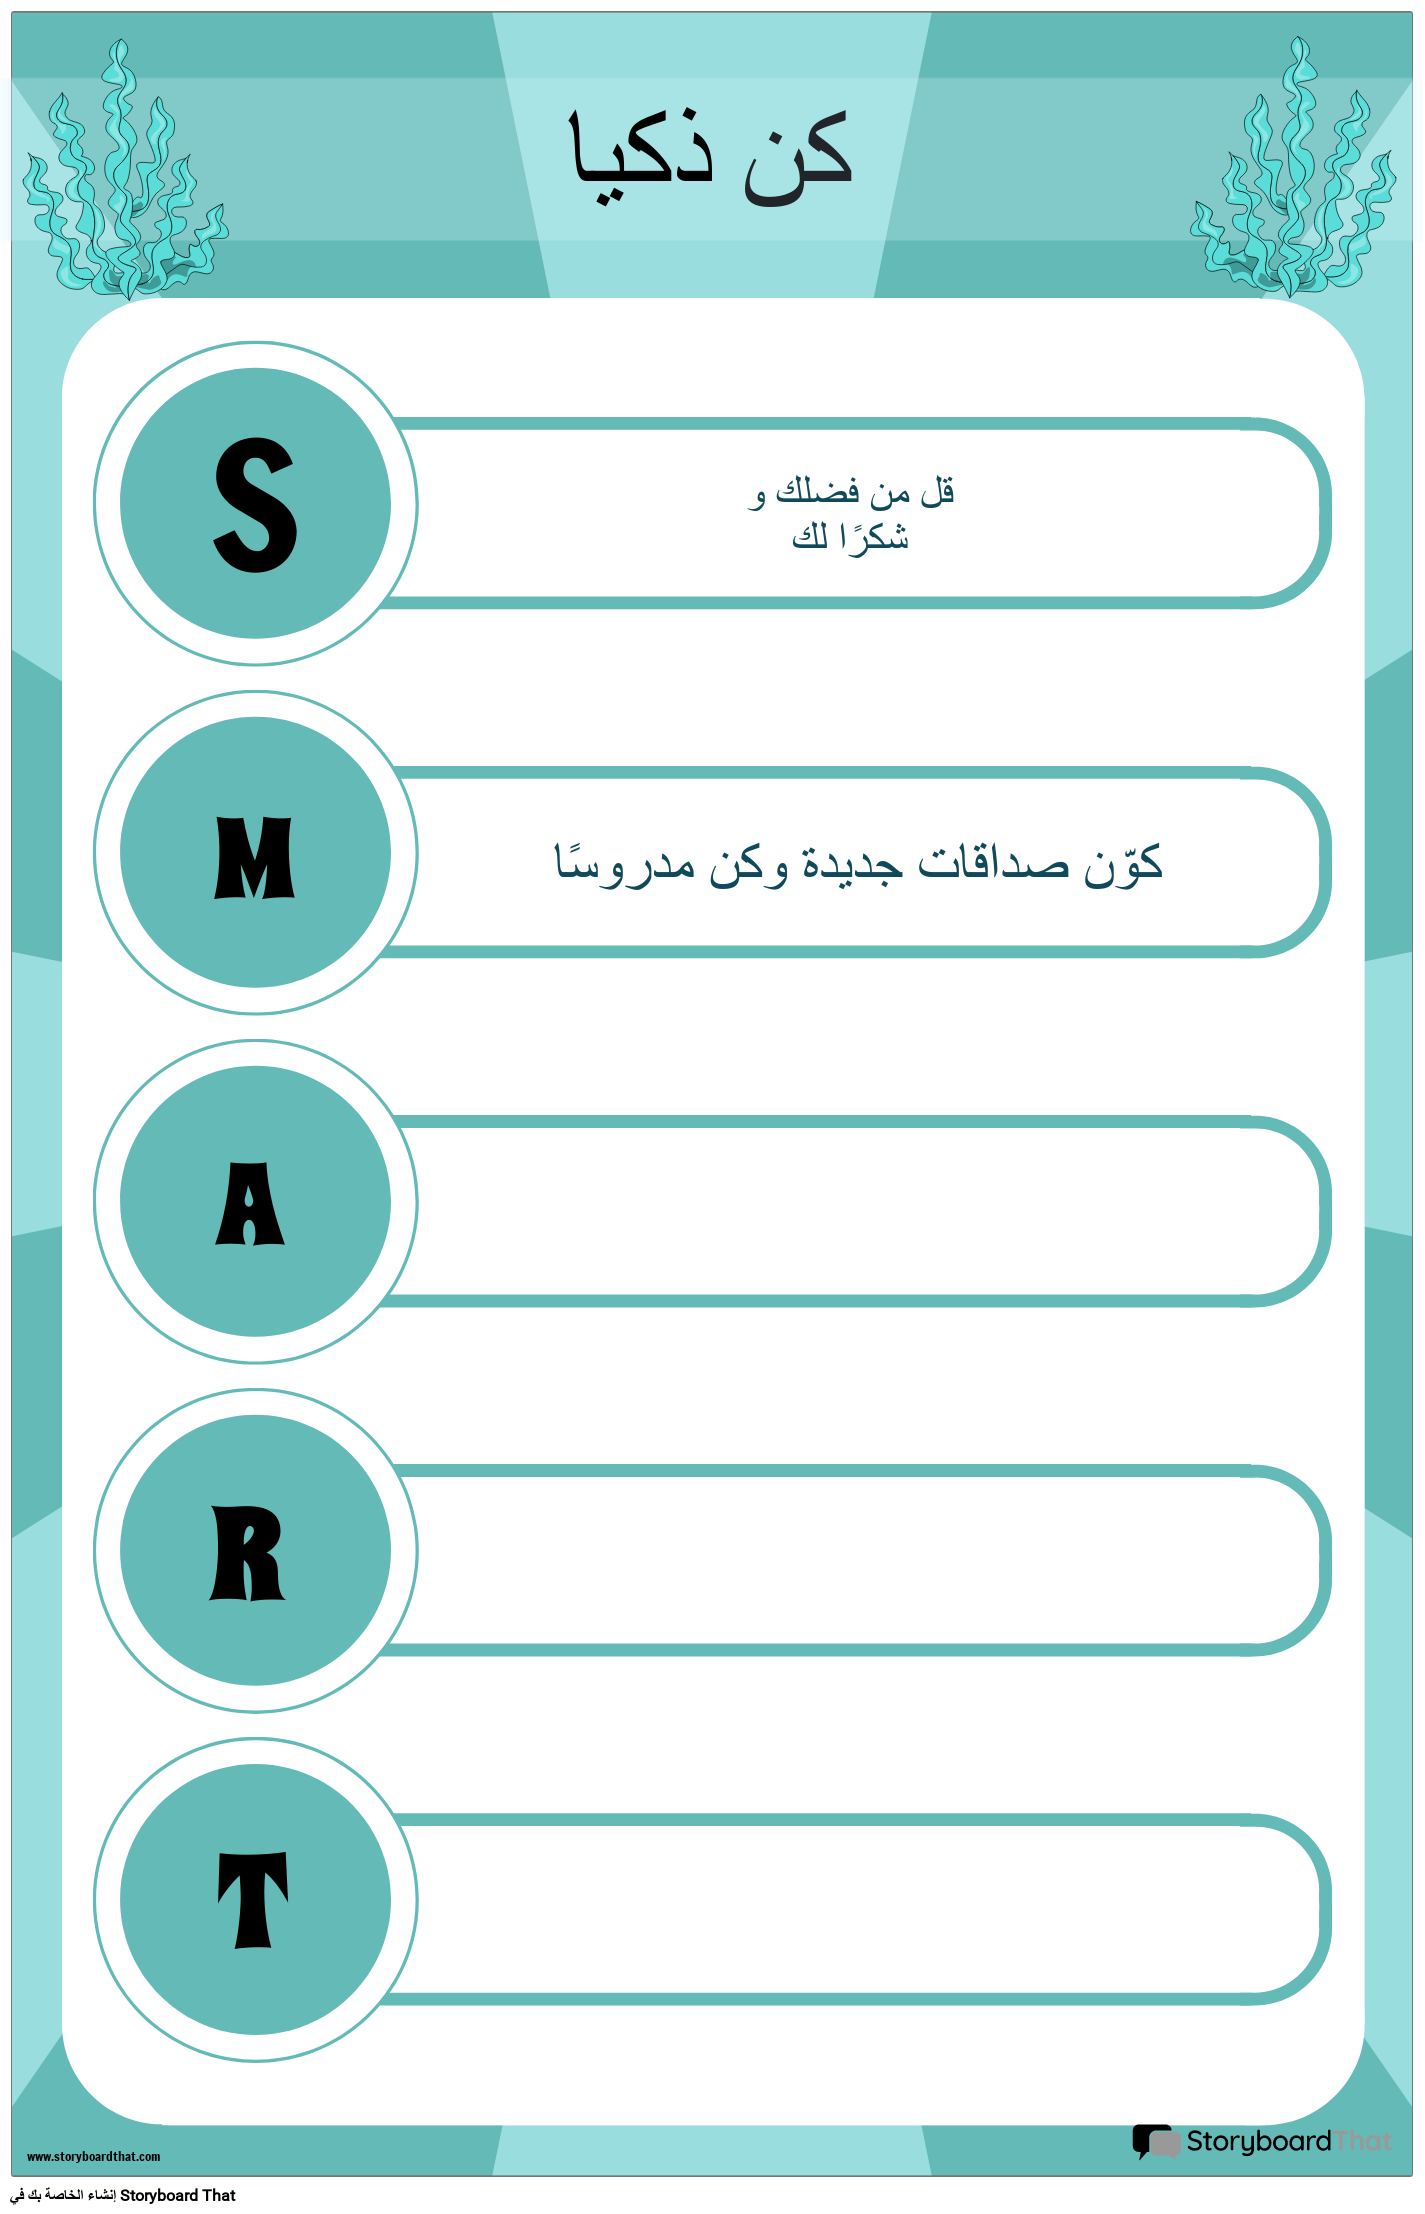 SMART - ملصقات تحفيزية للفصل الدراسي